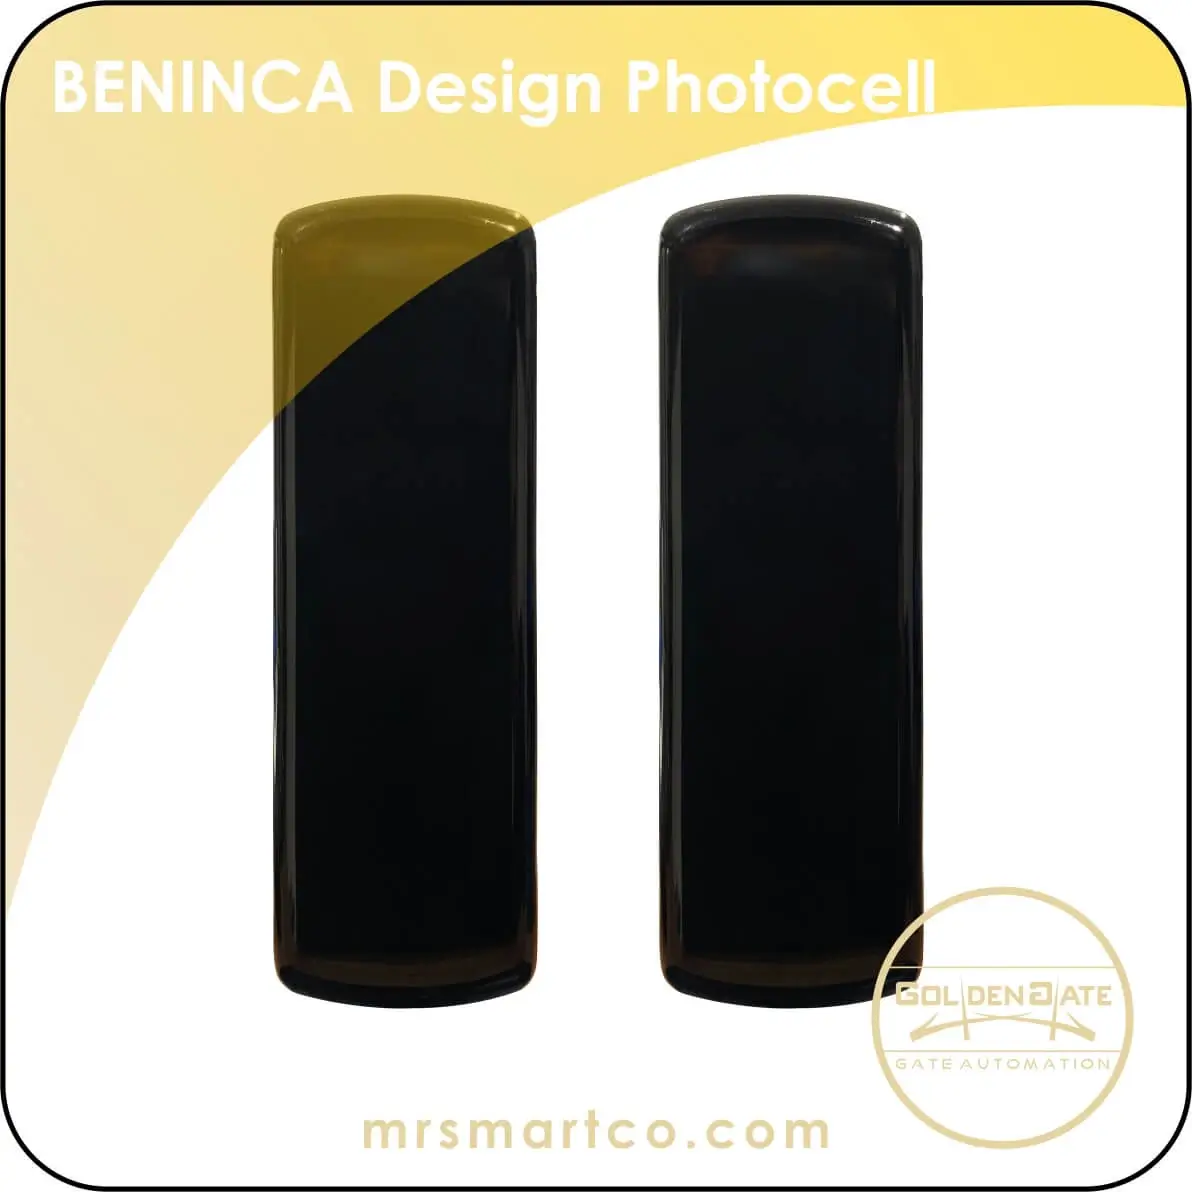 BENINCA Design Photocell